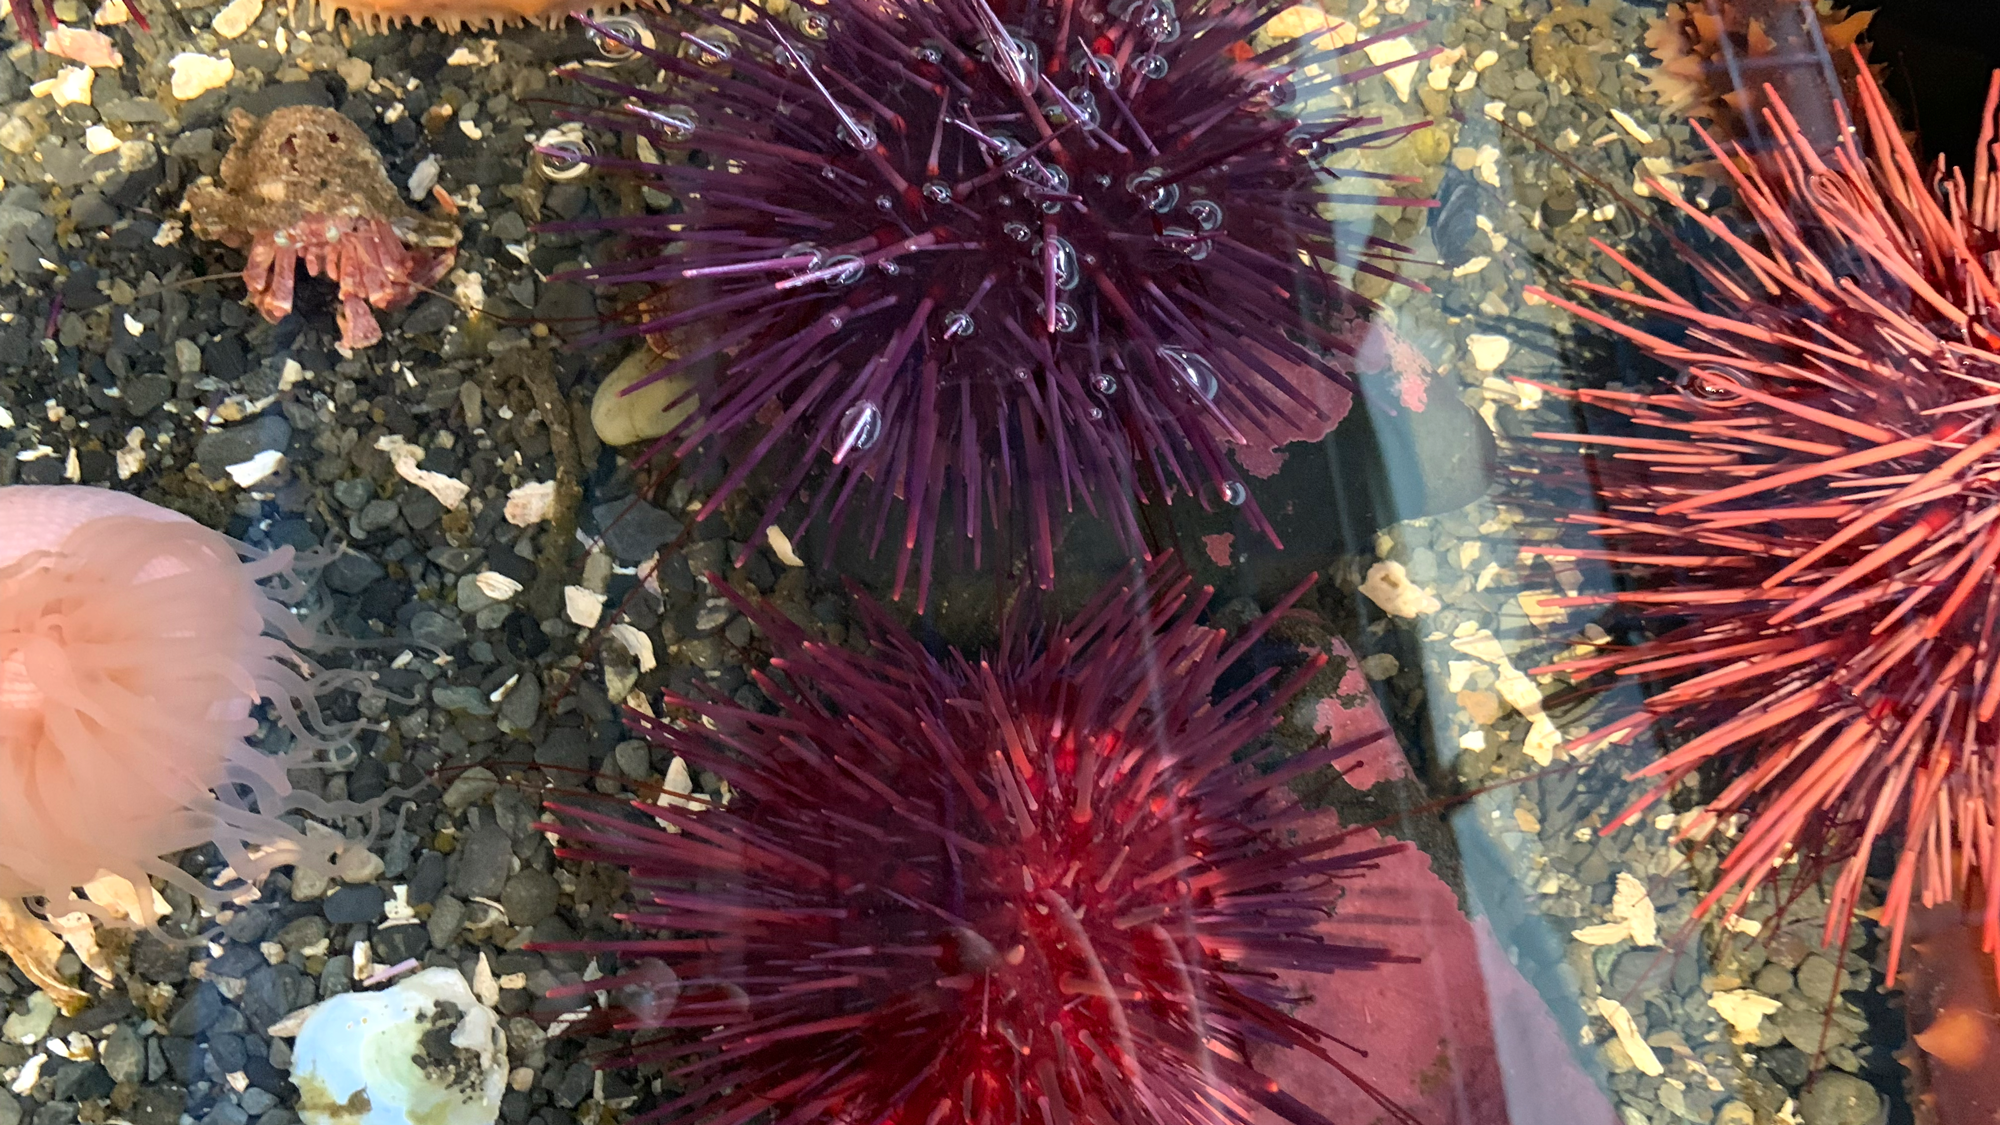 sea urchin external anatomy